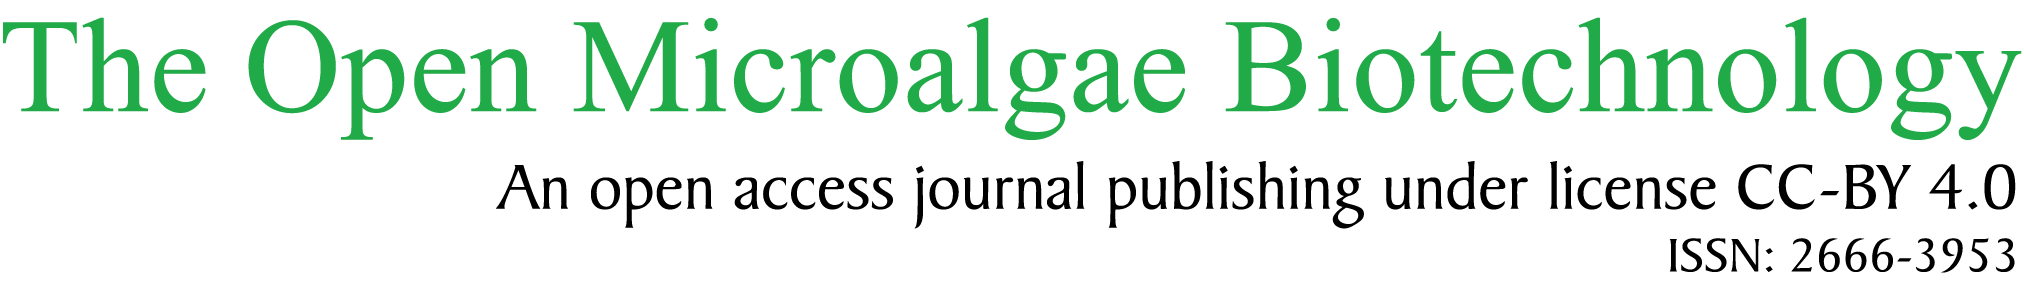 Open Microalgae Biotechnology